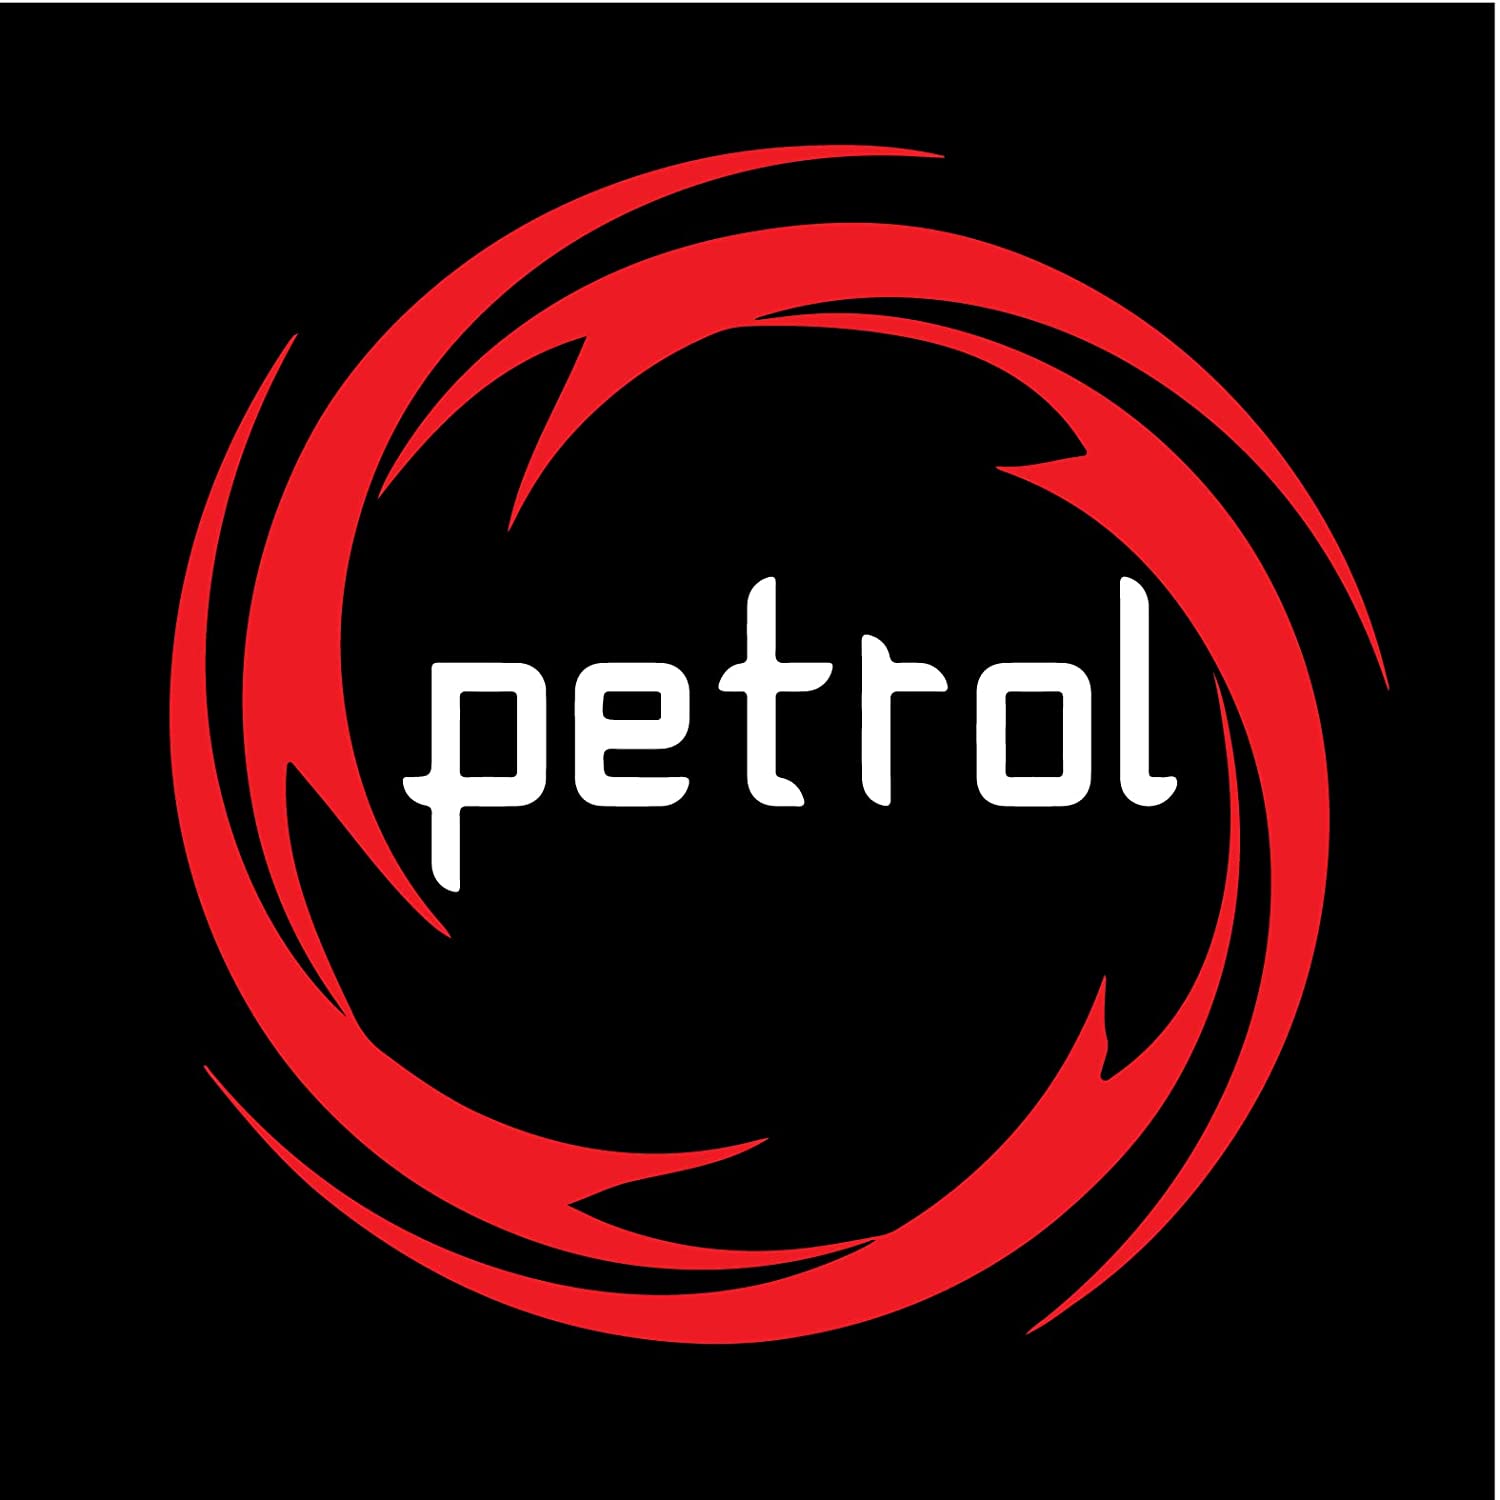 indnone® Meter Petrol Logo Car Sticker for Car Sticker Stylish Fuel Lid |  Black Color Standard Size